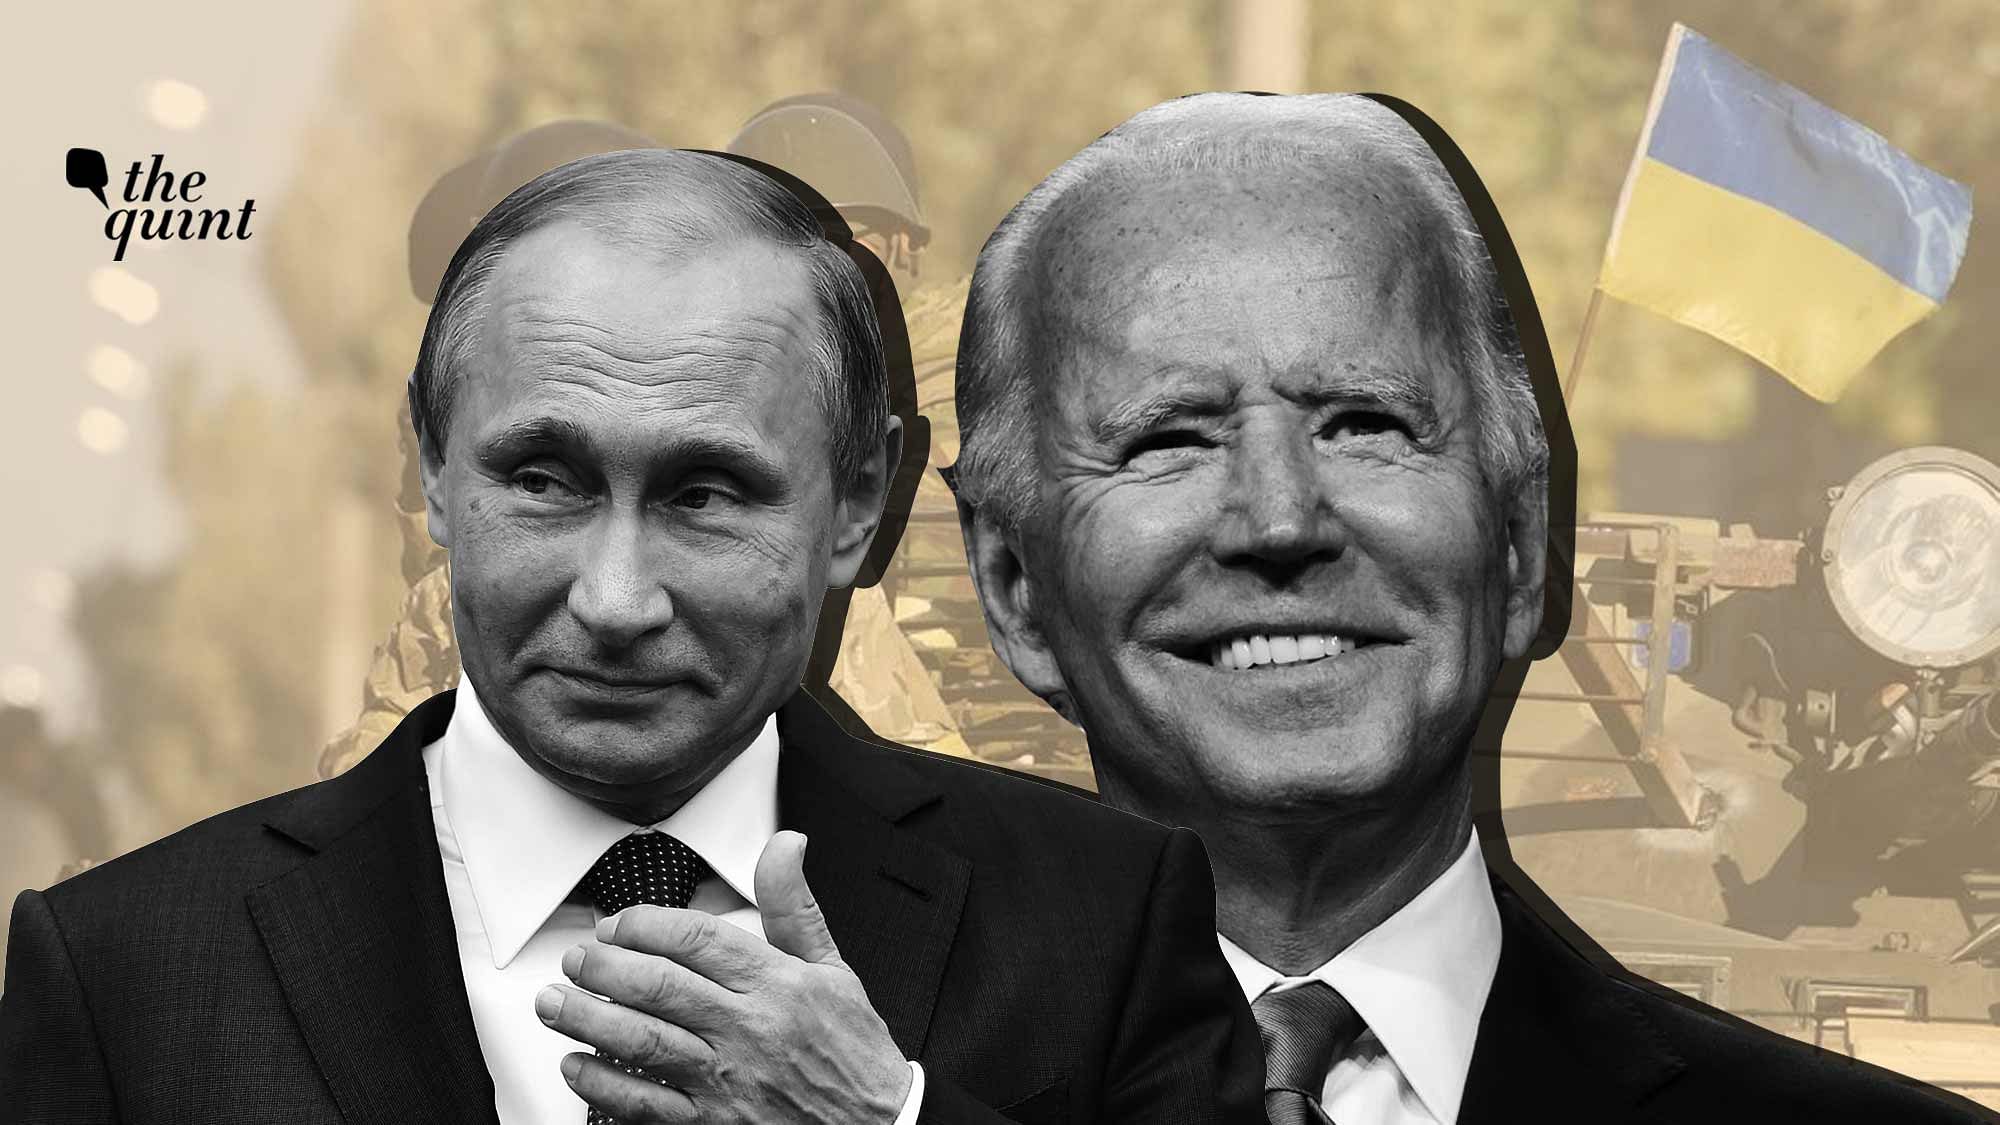 <div class="paragraphs"><p>Vladimir Putin and Joe Biden.&nbsp;</p></div>